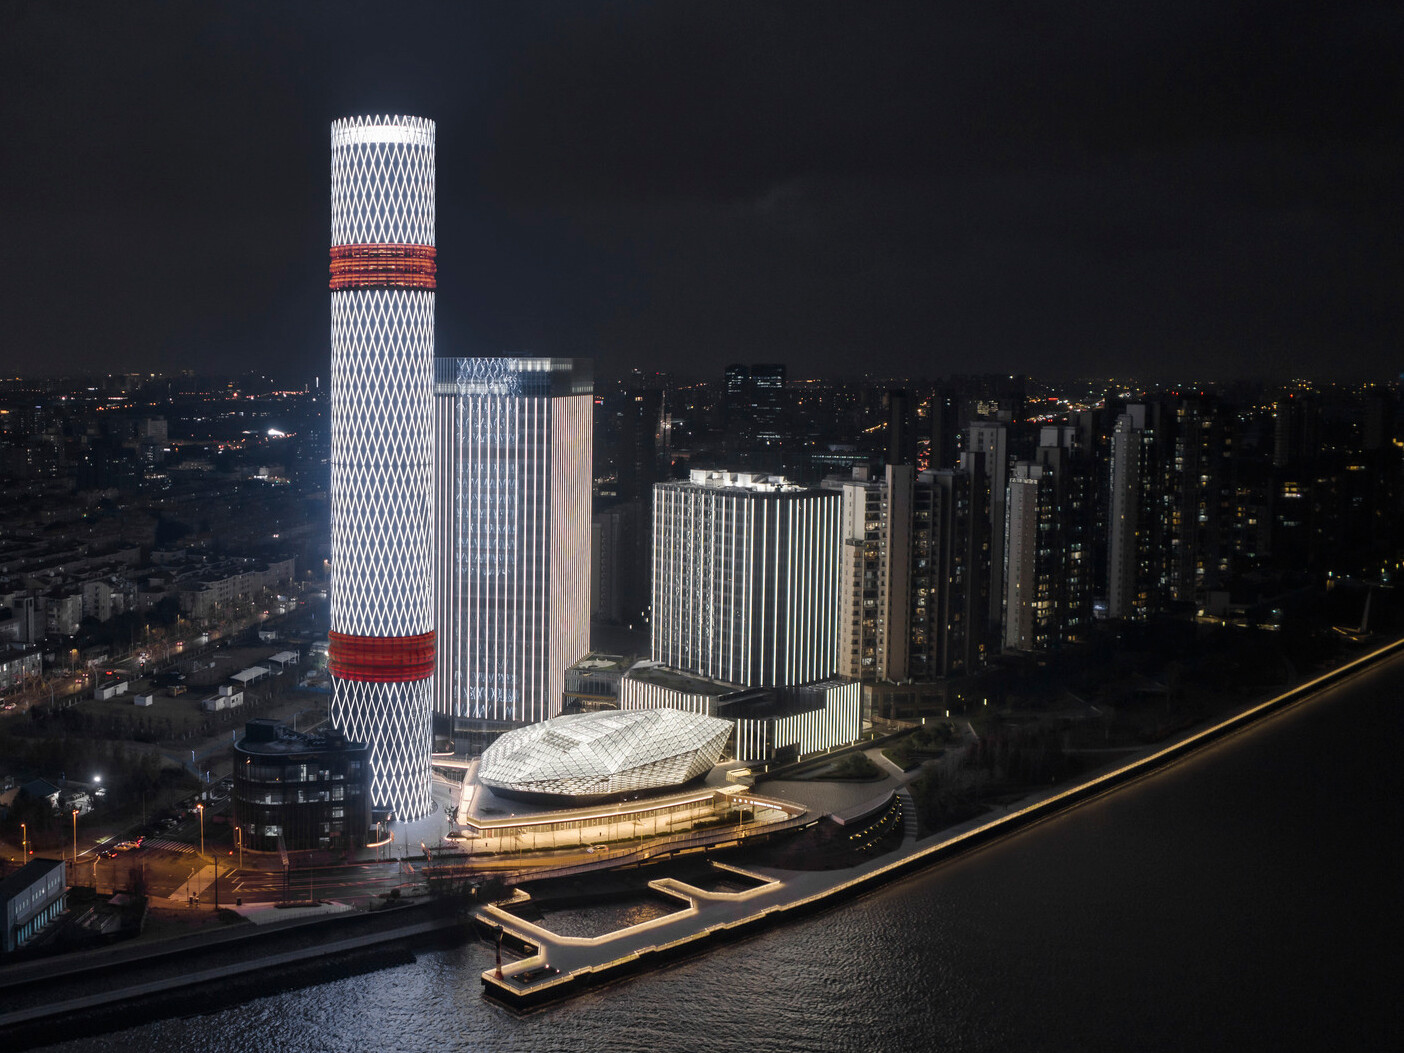 Baoshan Long Beach Complex illuminated at night along Shanghai's Yangtze River, diamond geometric light on cylindrical tower